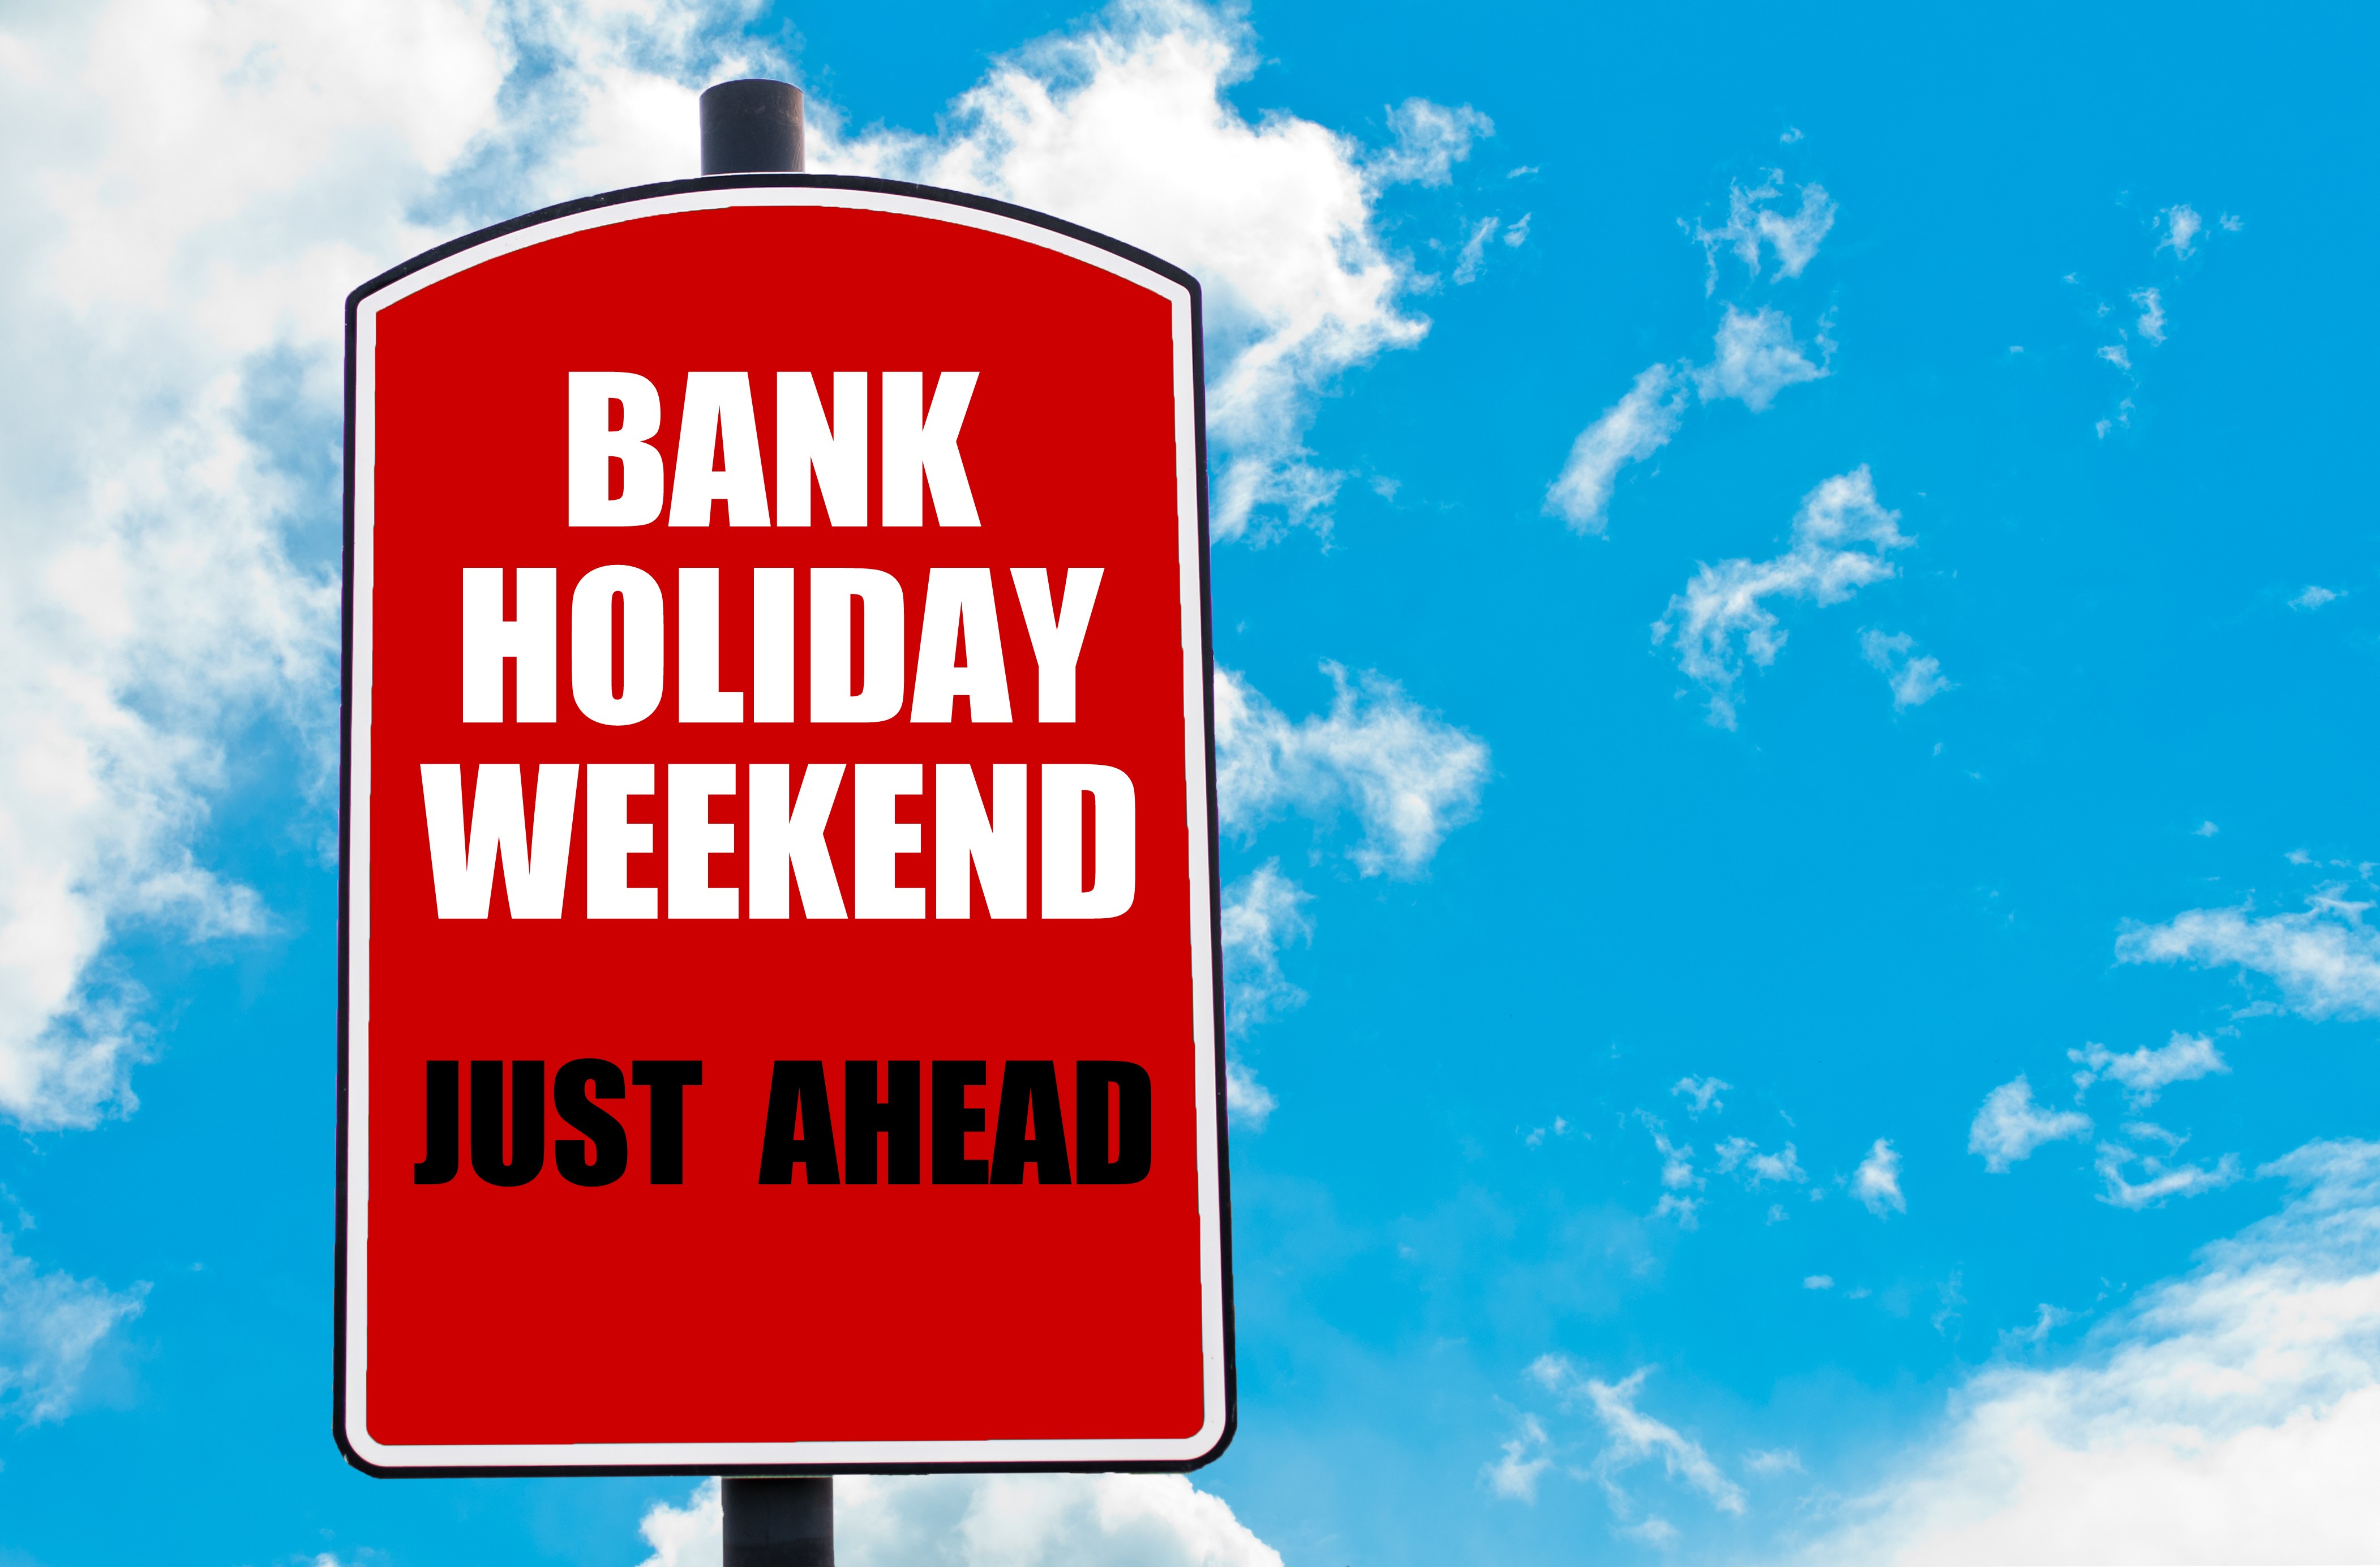 Office Closure For May Bank Holiday